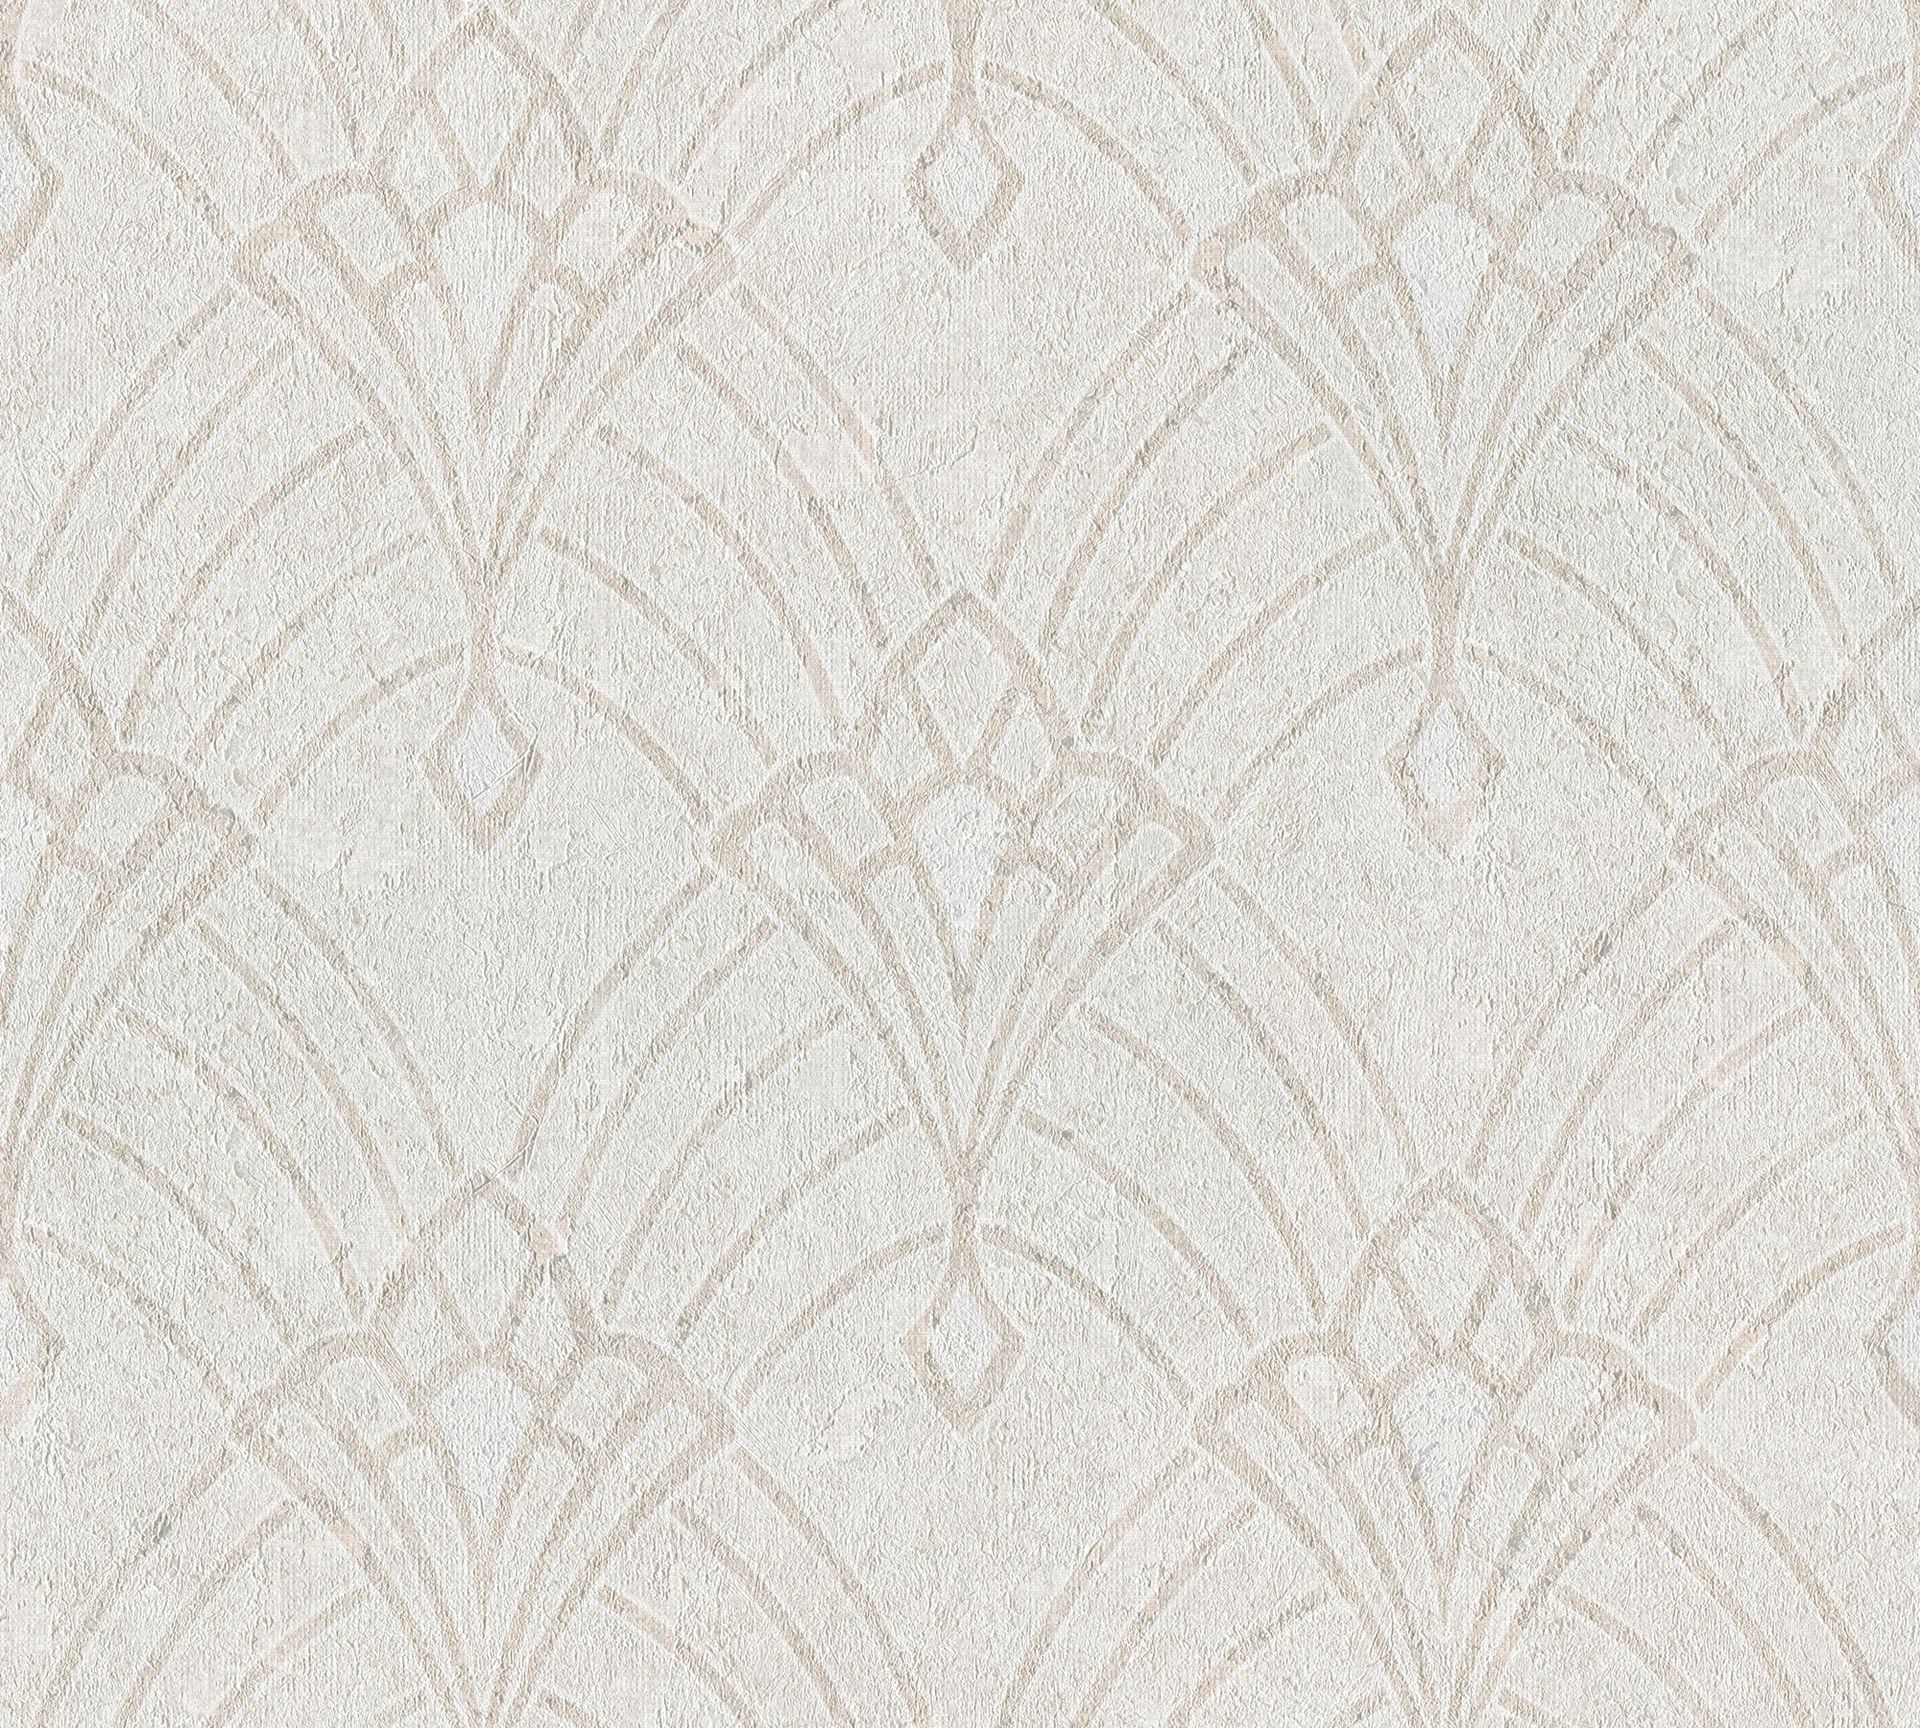 Livingwalls Mata Hari, Orientalische Tapete, beige, creme 380943